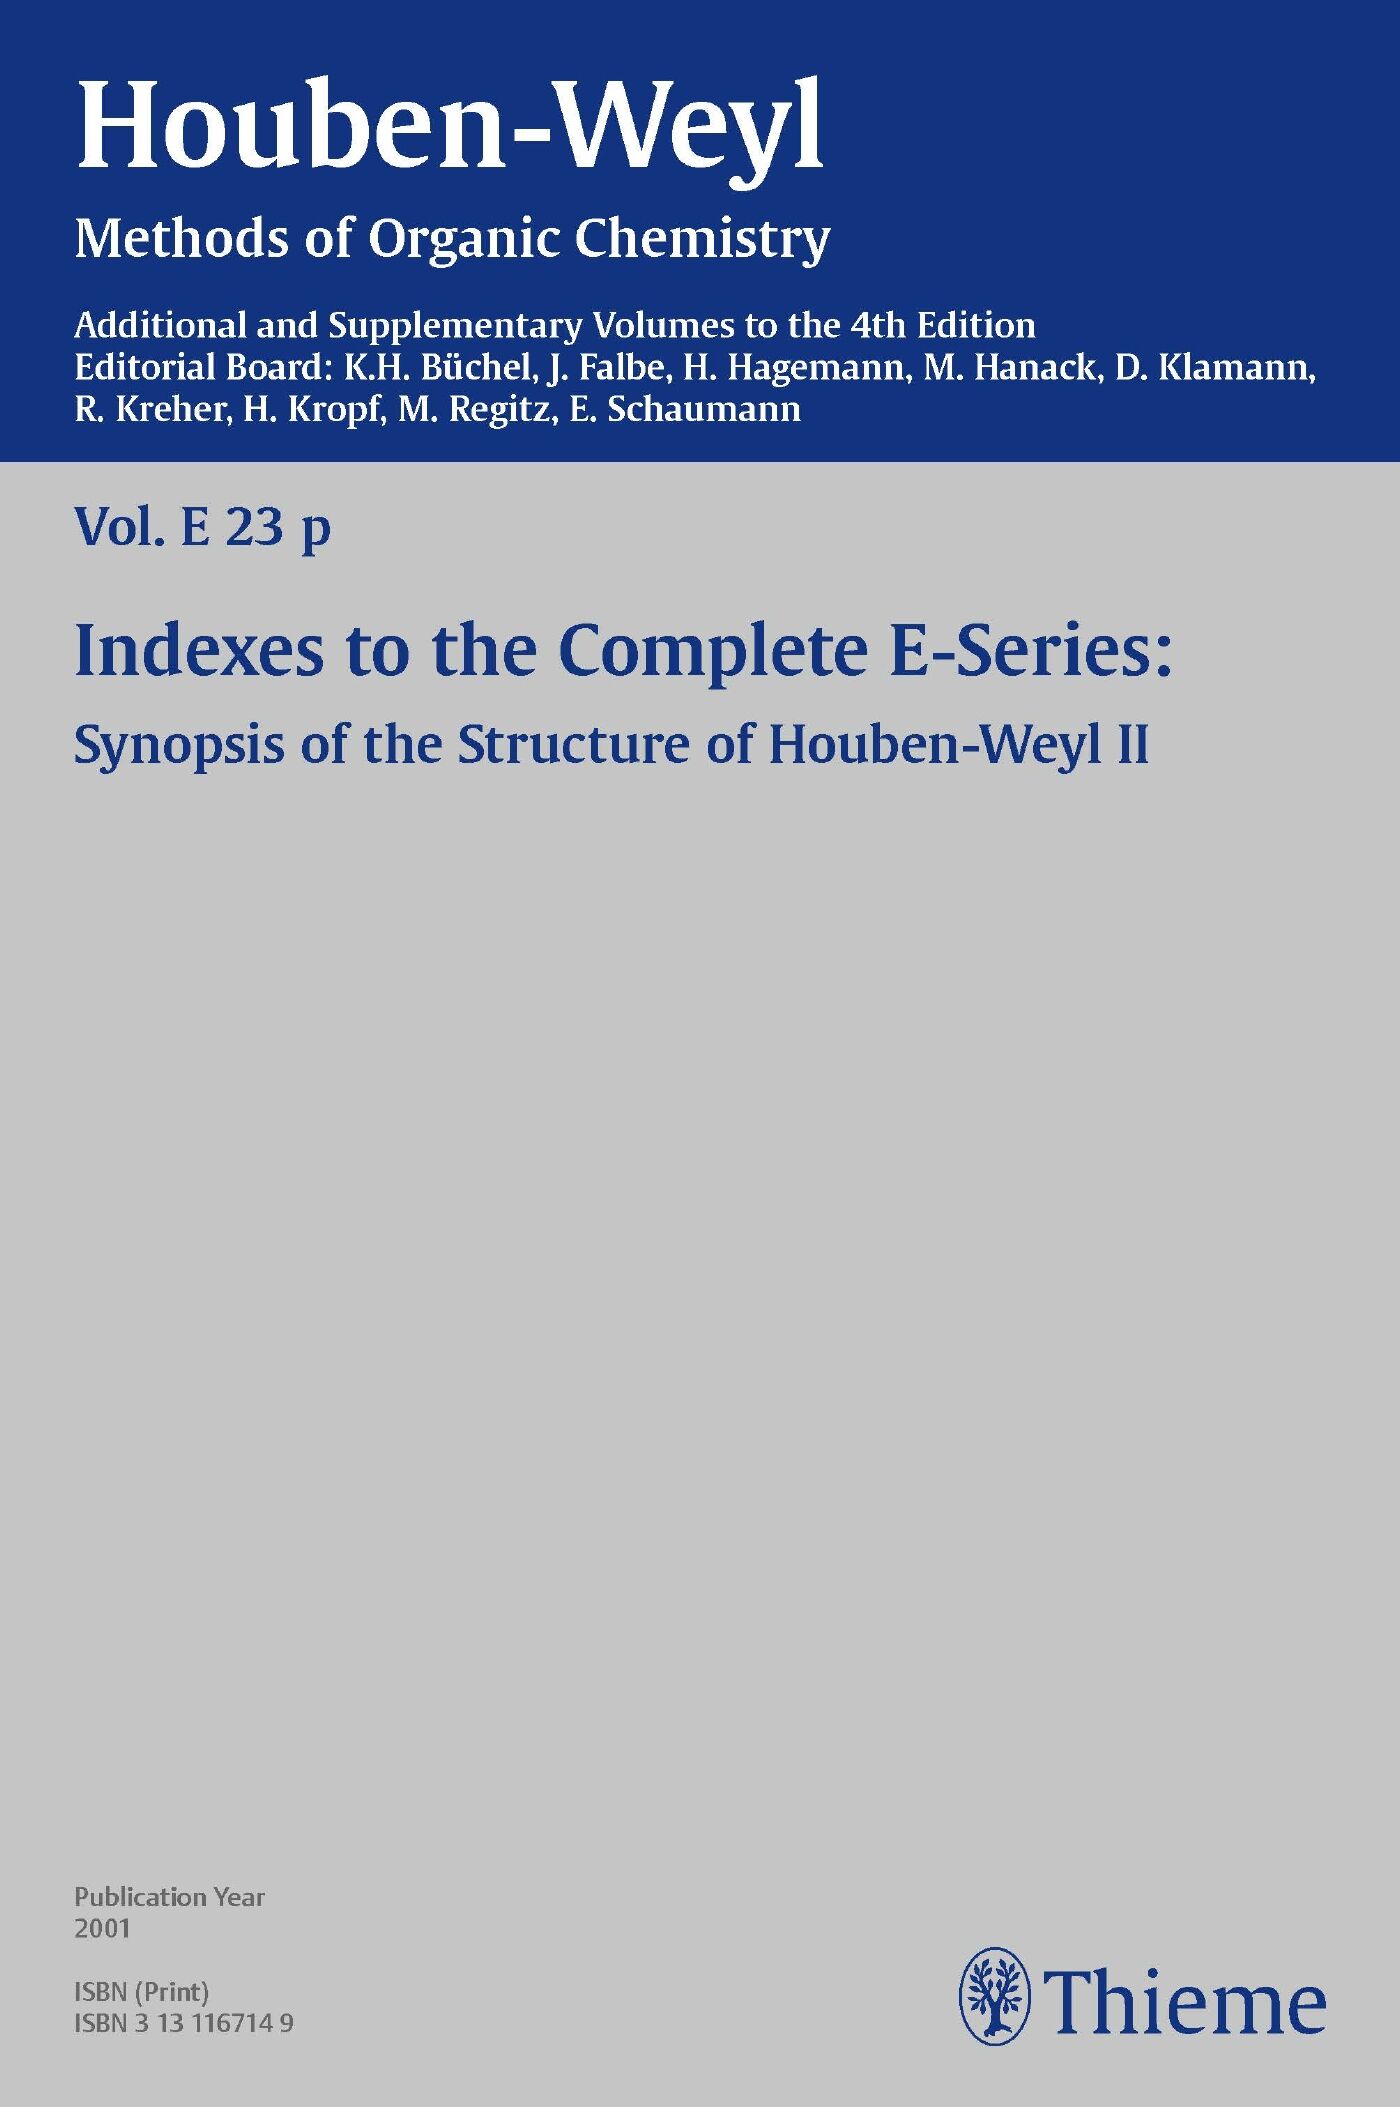 Houben-Weyl Methods of Organic Chemistry Vol. E 23p, 4th Edition Supplement, 9783131827746